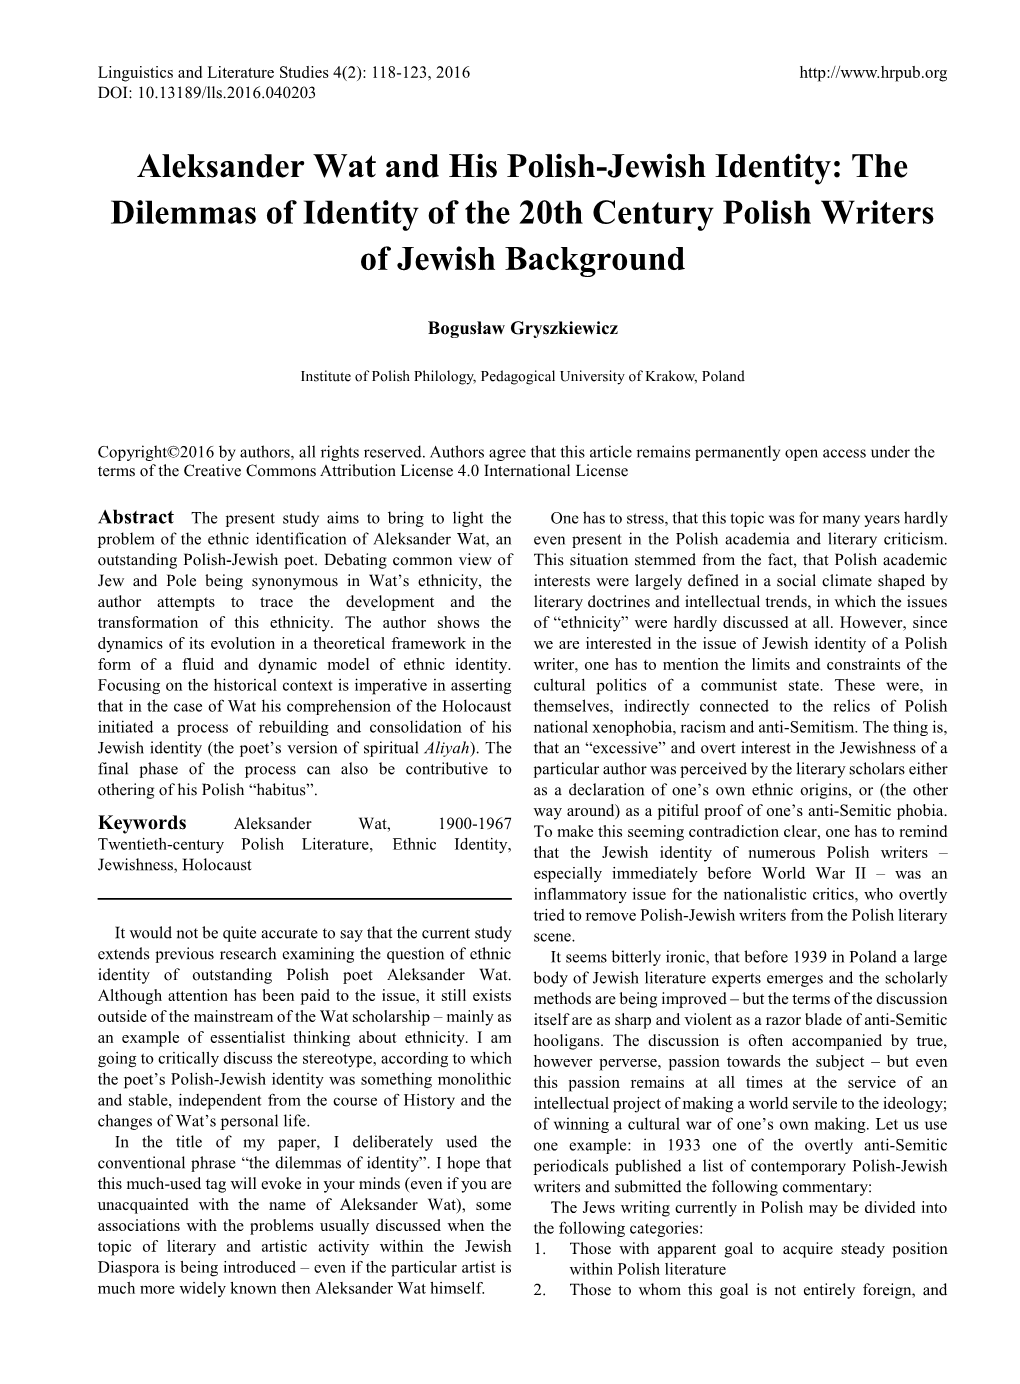 Aleksander Wat and His Polish-Jewish Identity: the Dilemmas of Identity of the 20Th Century Polish Writers of Jewish Background